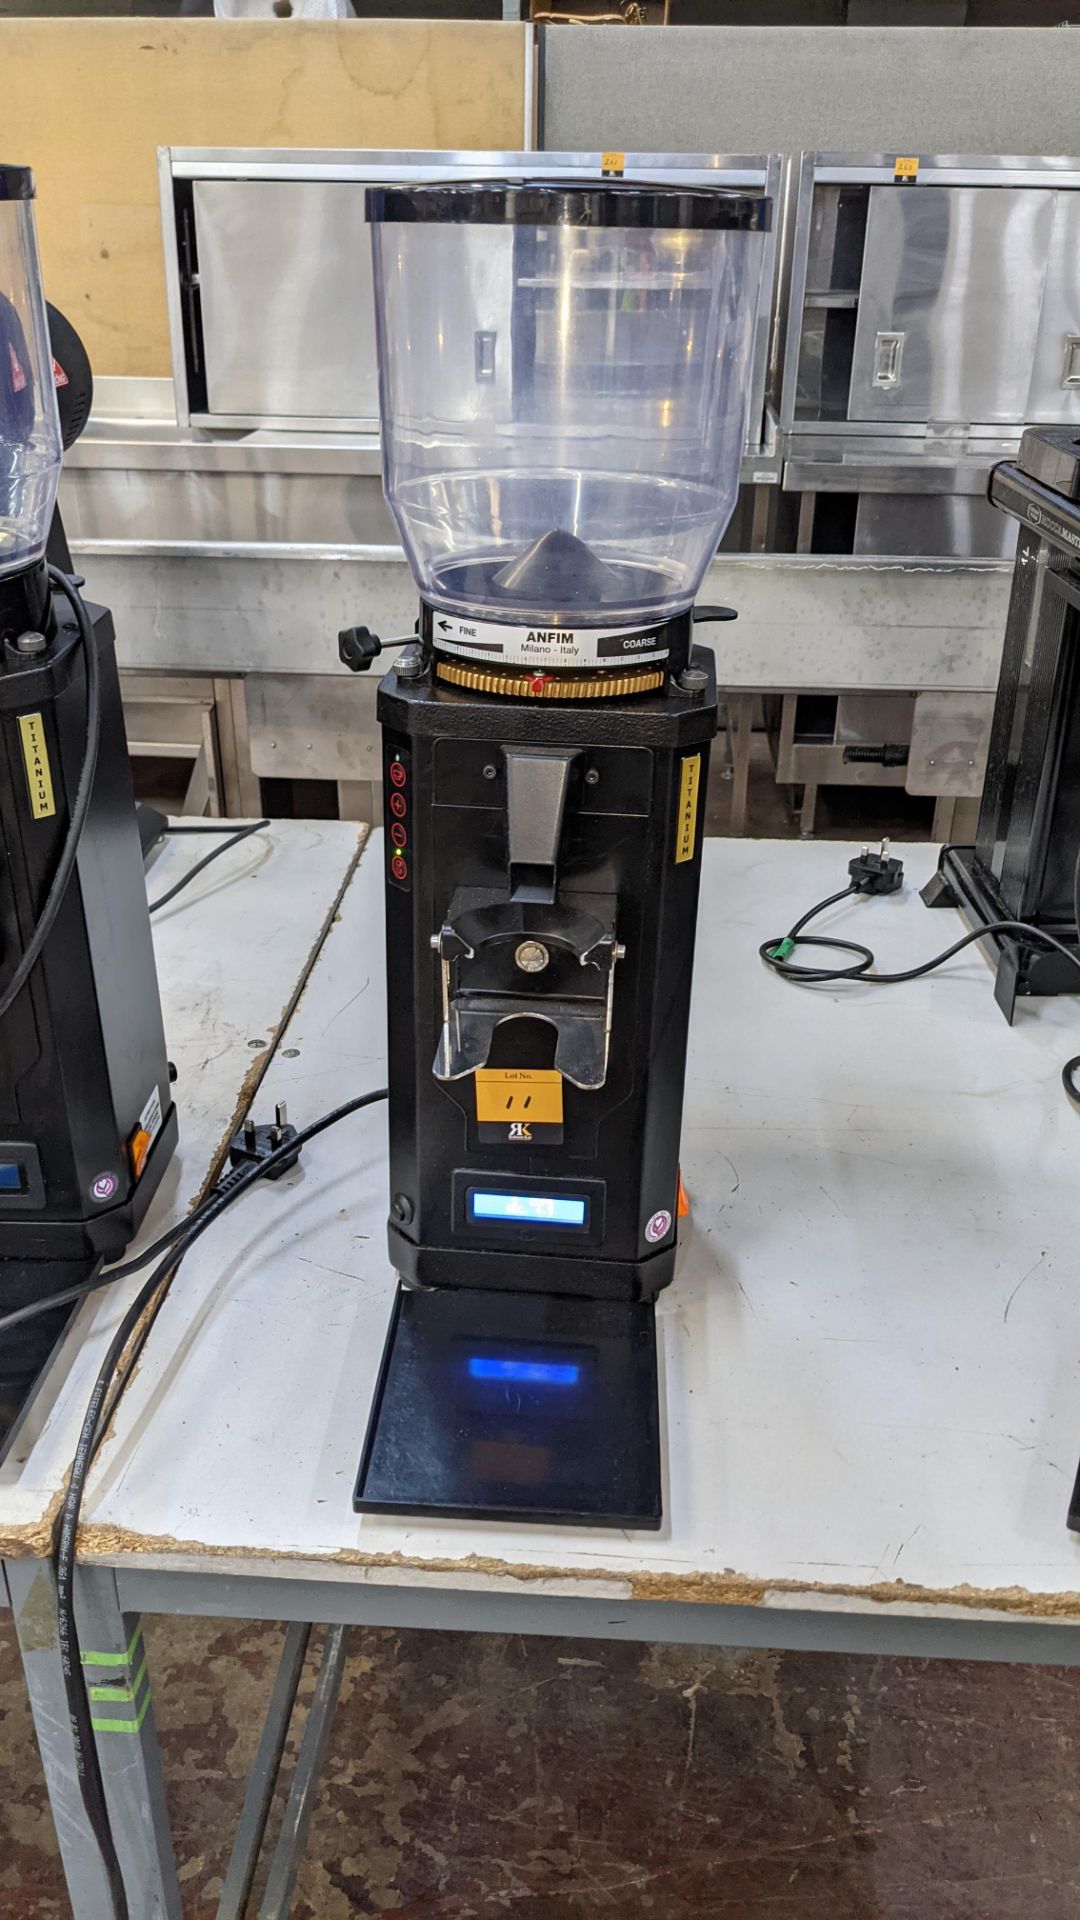 2019 Anfim model SPii titanium espresso grinder with digital display. Understood to have been purcha